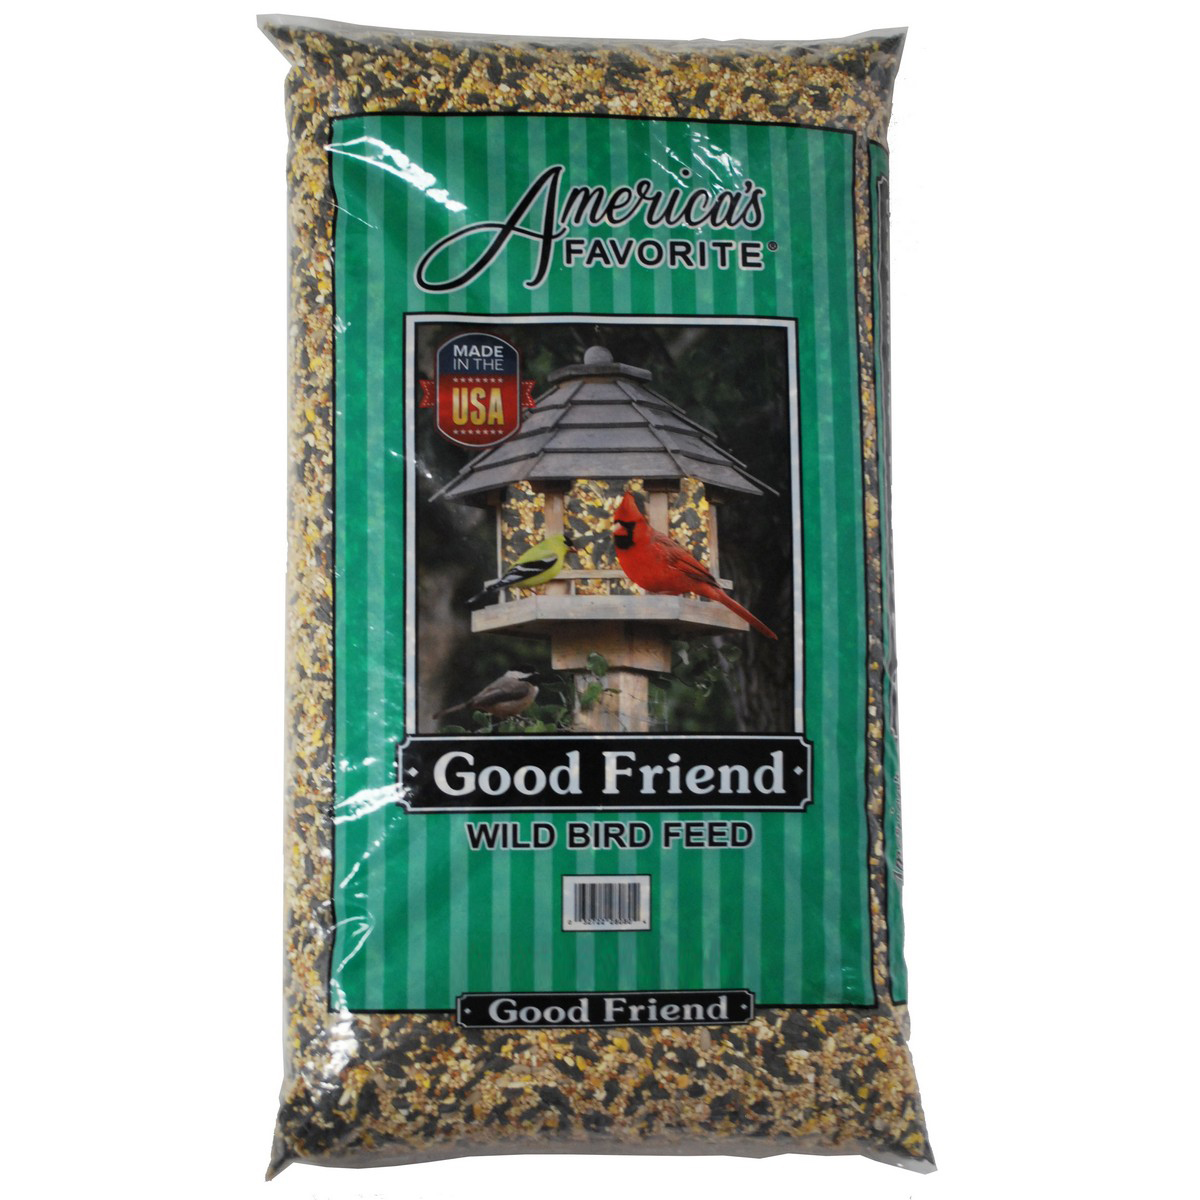 Picture of Americas Favorite 2800820 20 lbs Good Friend Wild Bird Feed Dark Green Stripe Bag, Dark Green Stripe